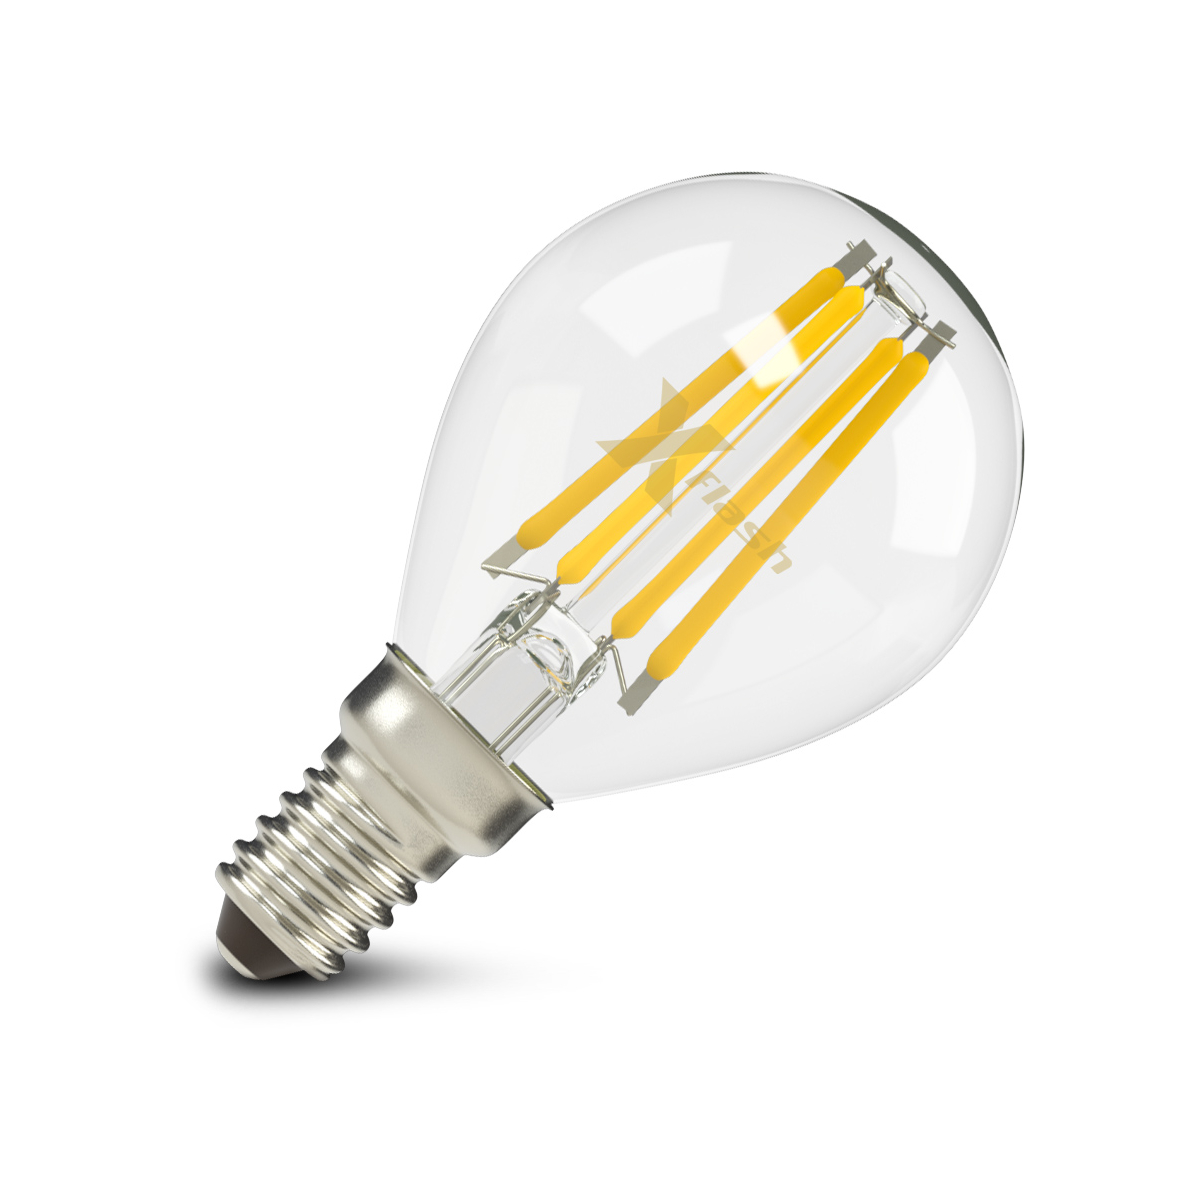 Светодиодные лампы купить цена. Цоколь e14 светодиодная лампа. Лампа Osram 4w 220 филаментная. Лампа светодиодная x-Flash 48021, e27, g45, 4вт. Лампа (230v_4w) [e14].